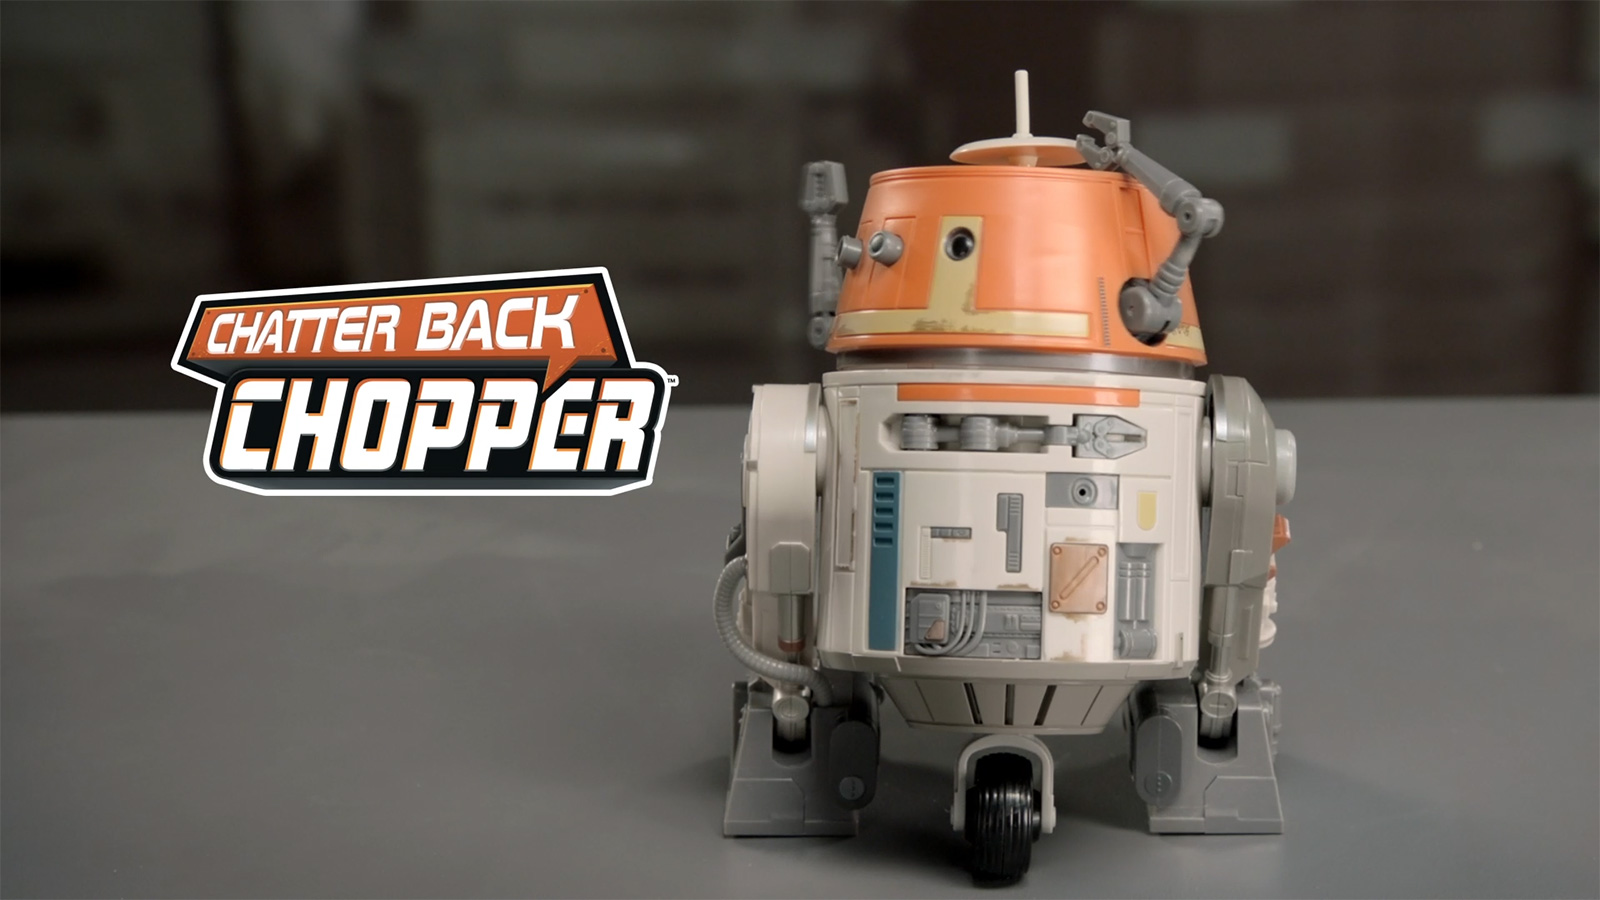 Hasbro Promotional Video - Chatter Back Chopper Animatronic